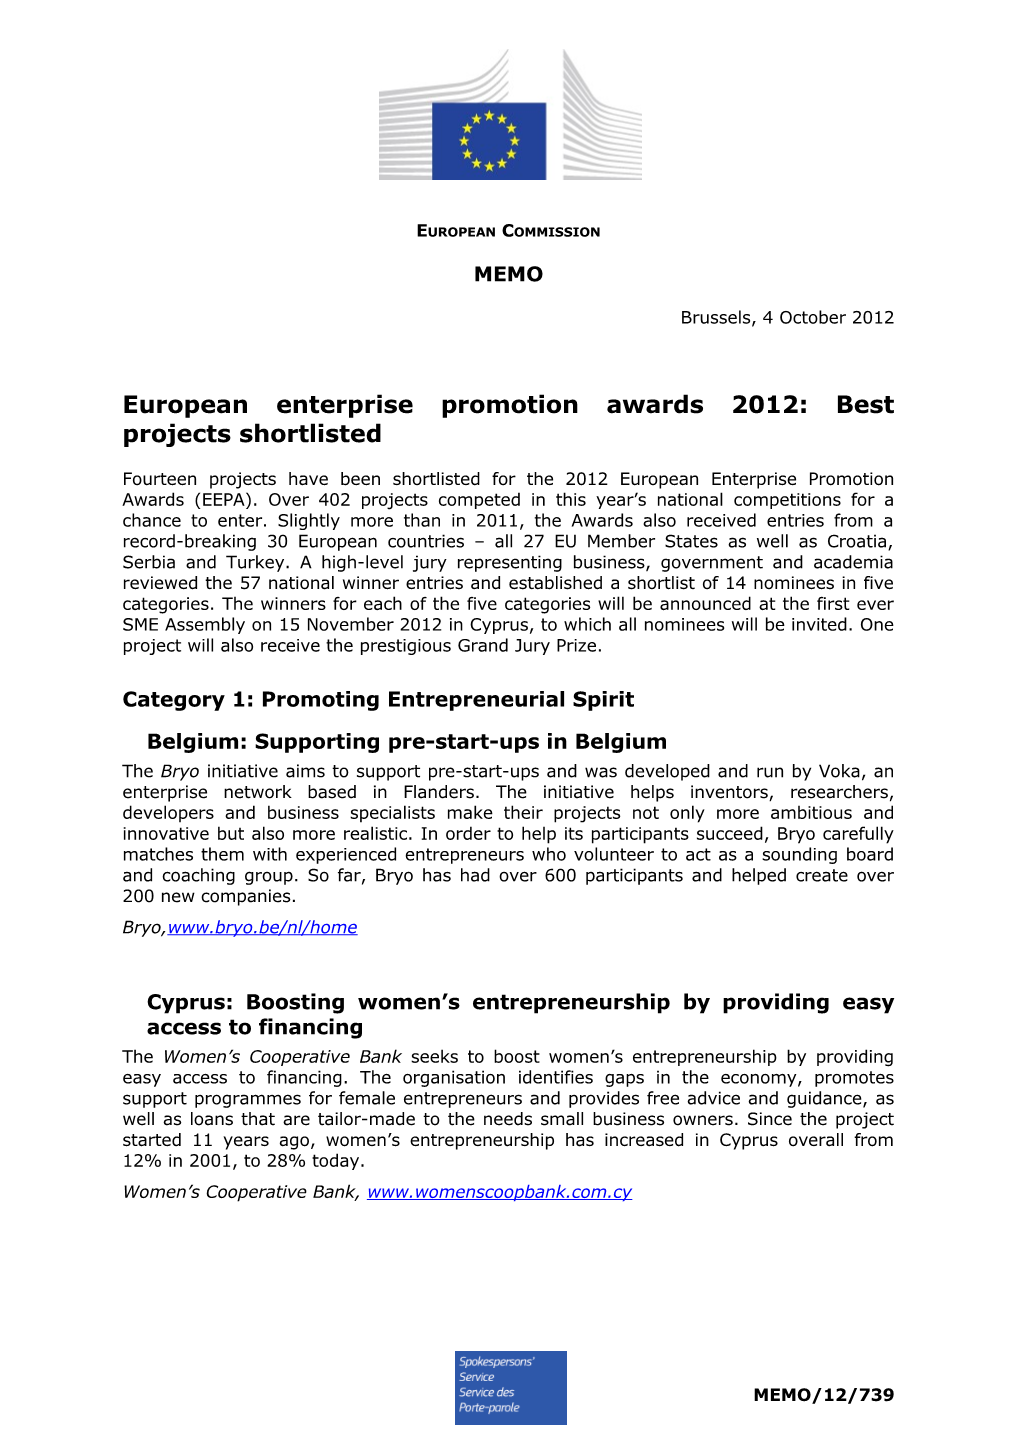 European Enterprise Promotion Awards 2012: Best Projects Shortlisted